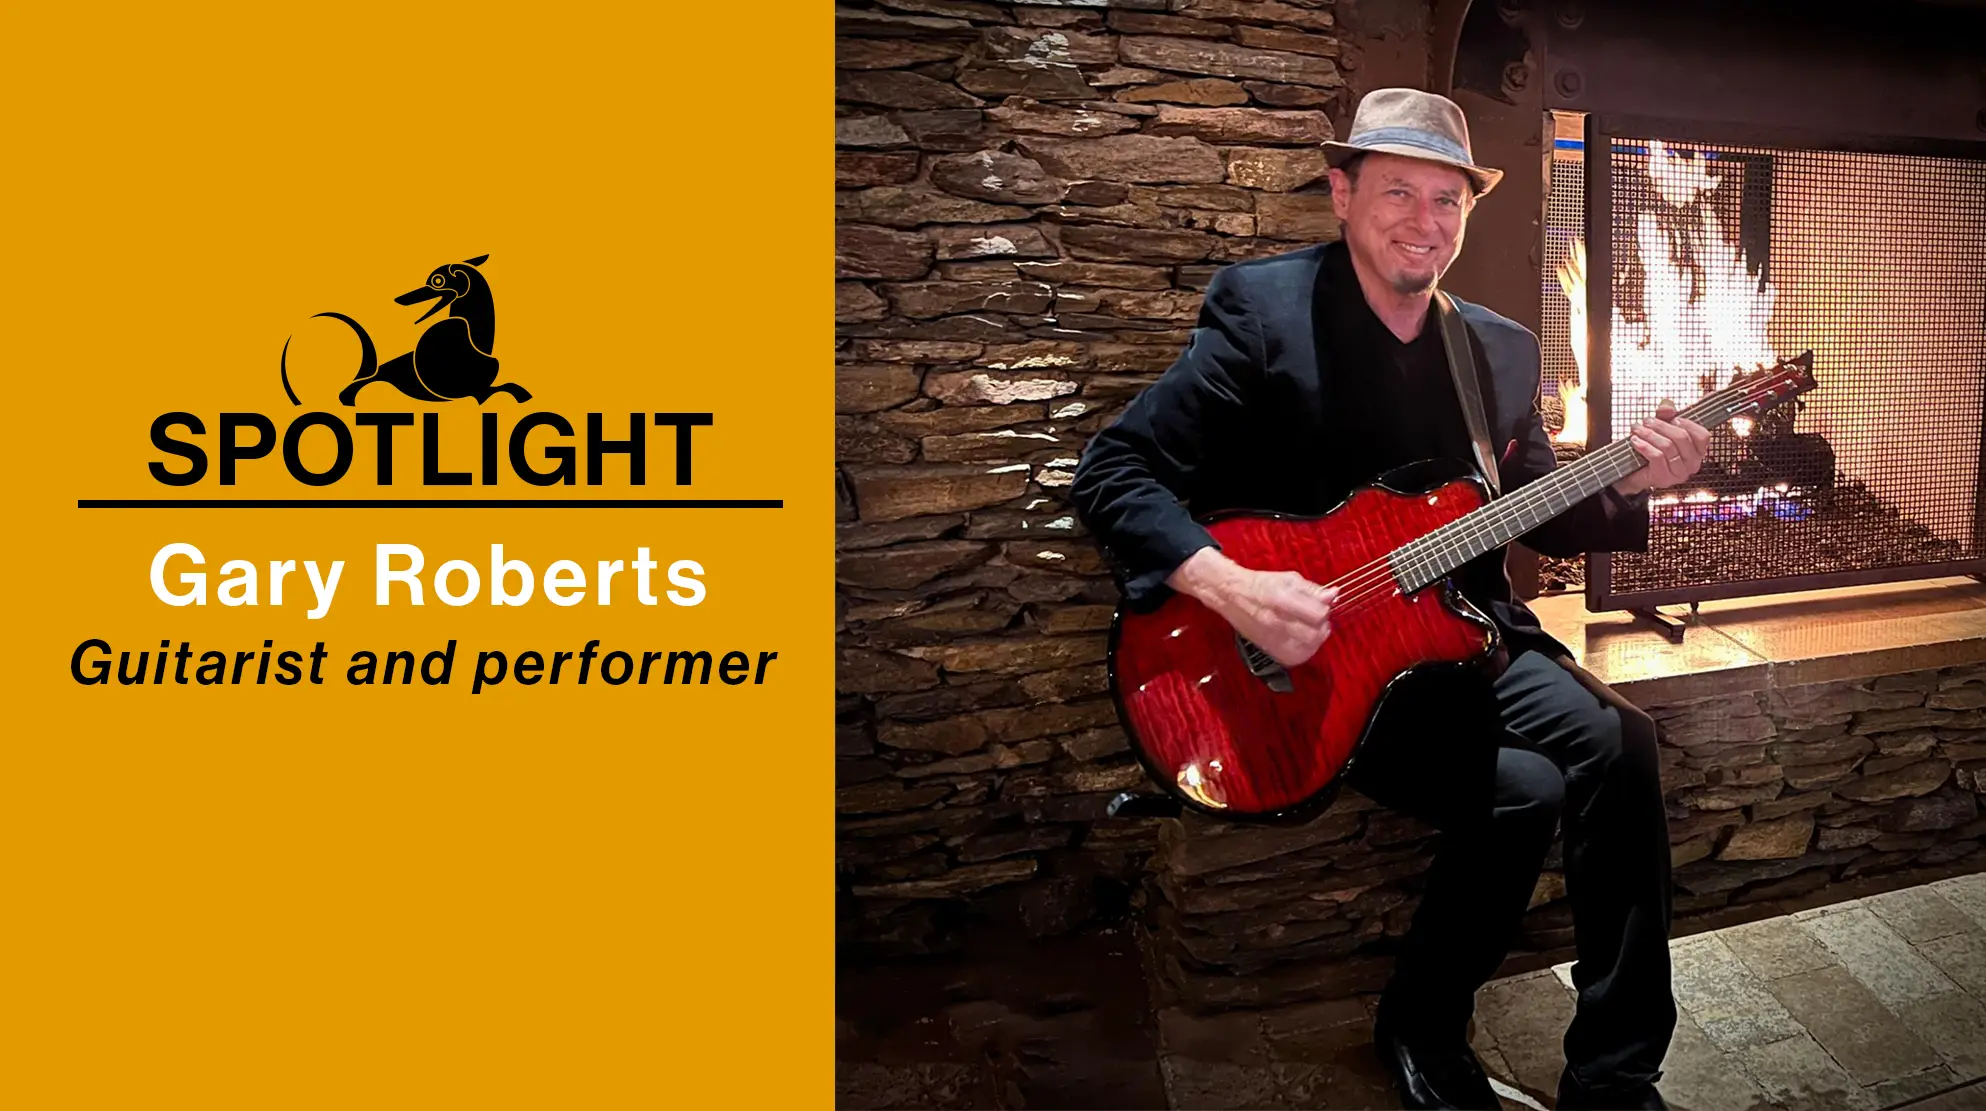 Gary Roberts guitarist and performer emerald guitars carbon fiber